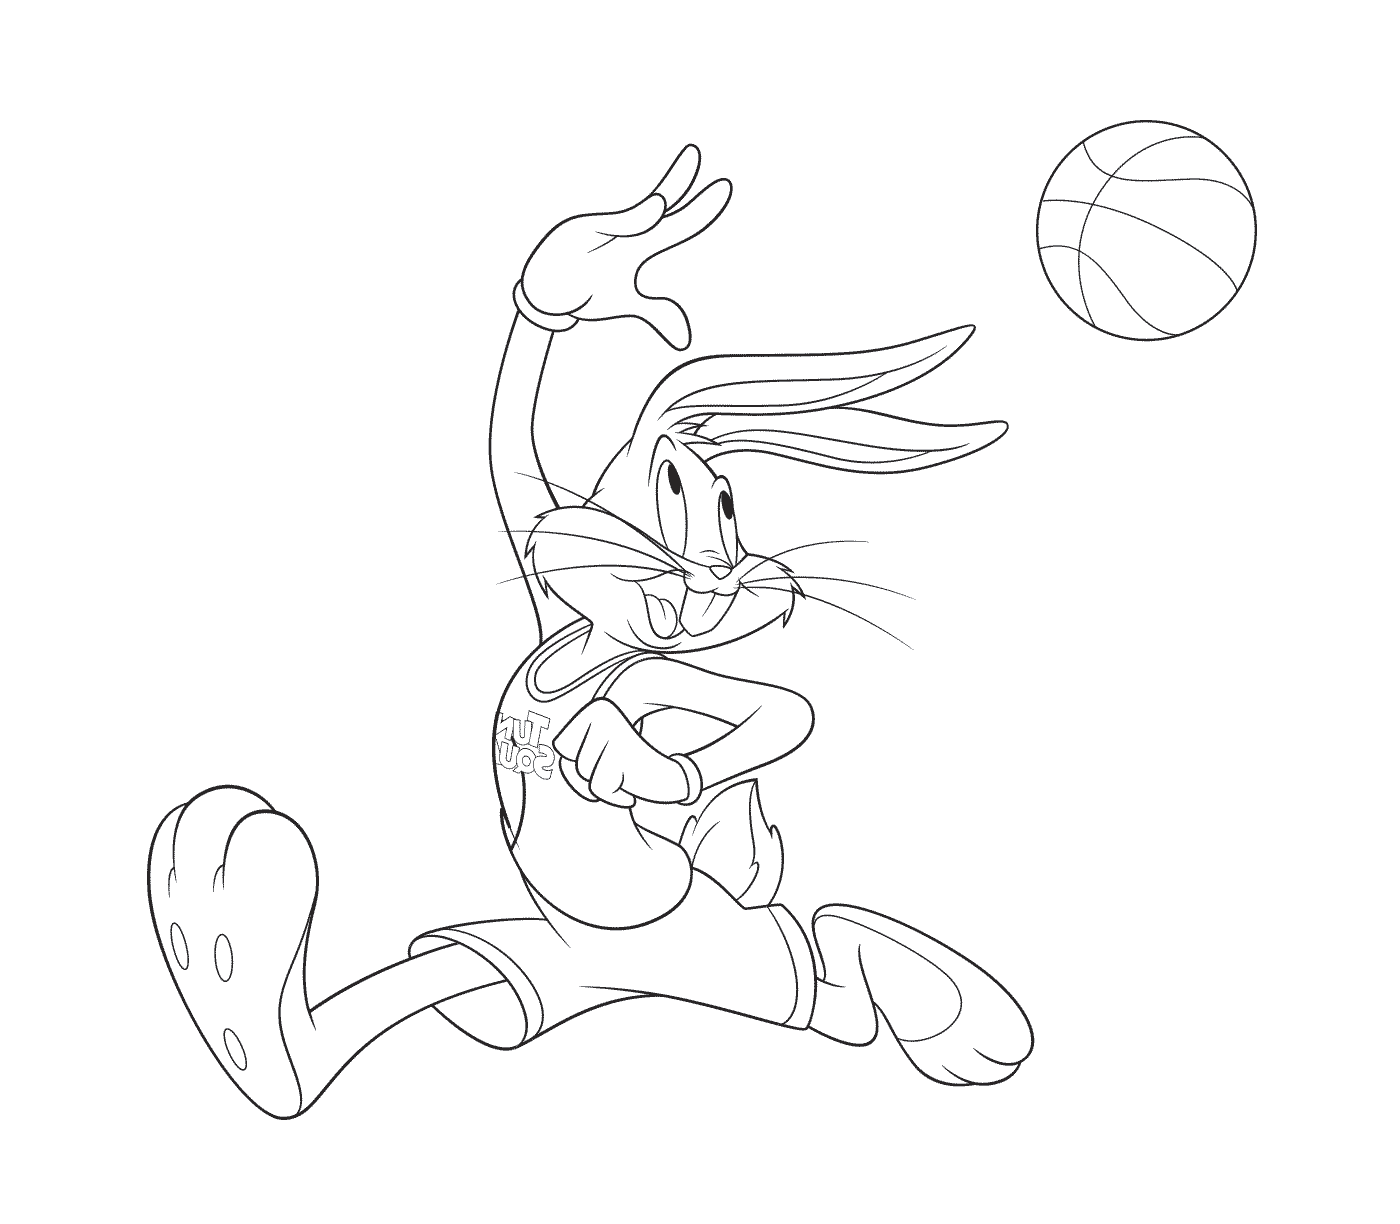  Rabbit playing basketball 